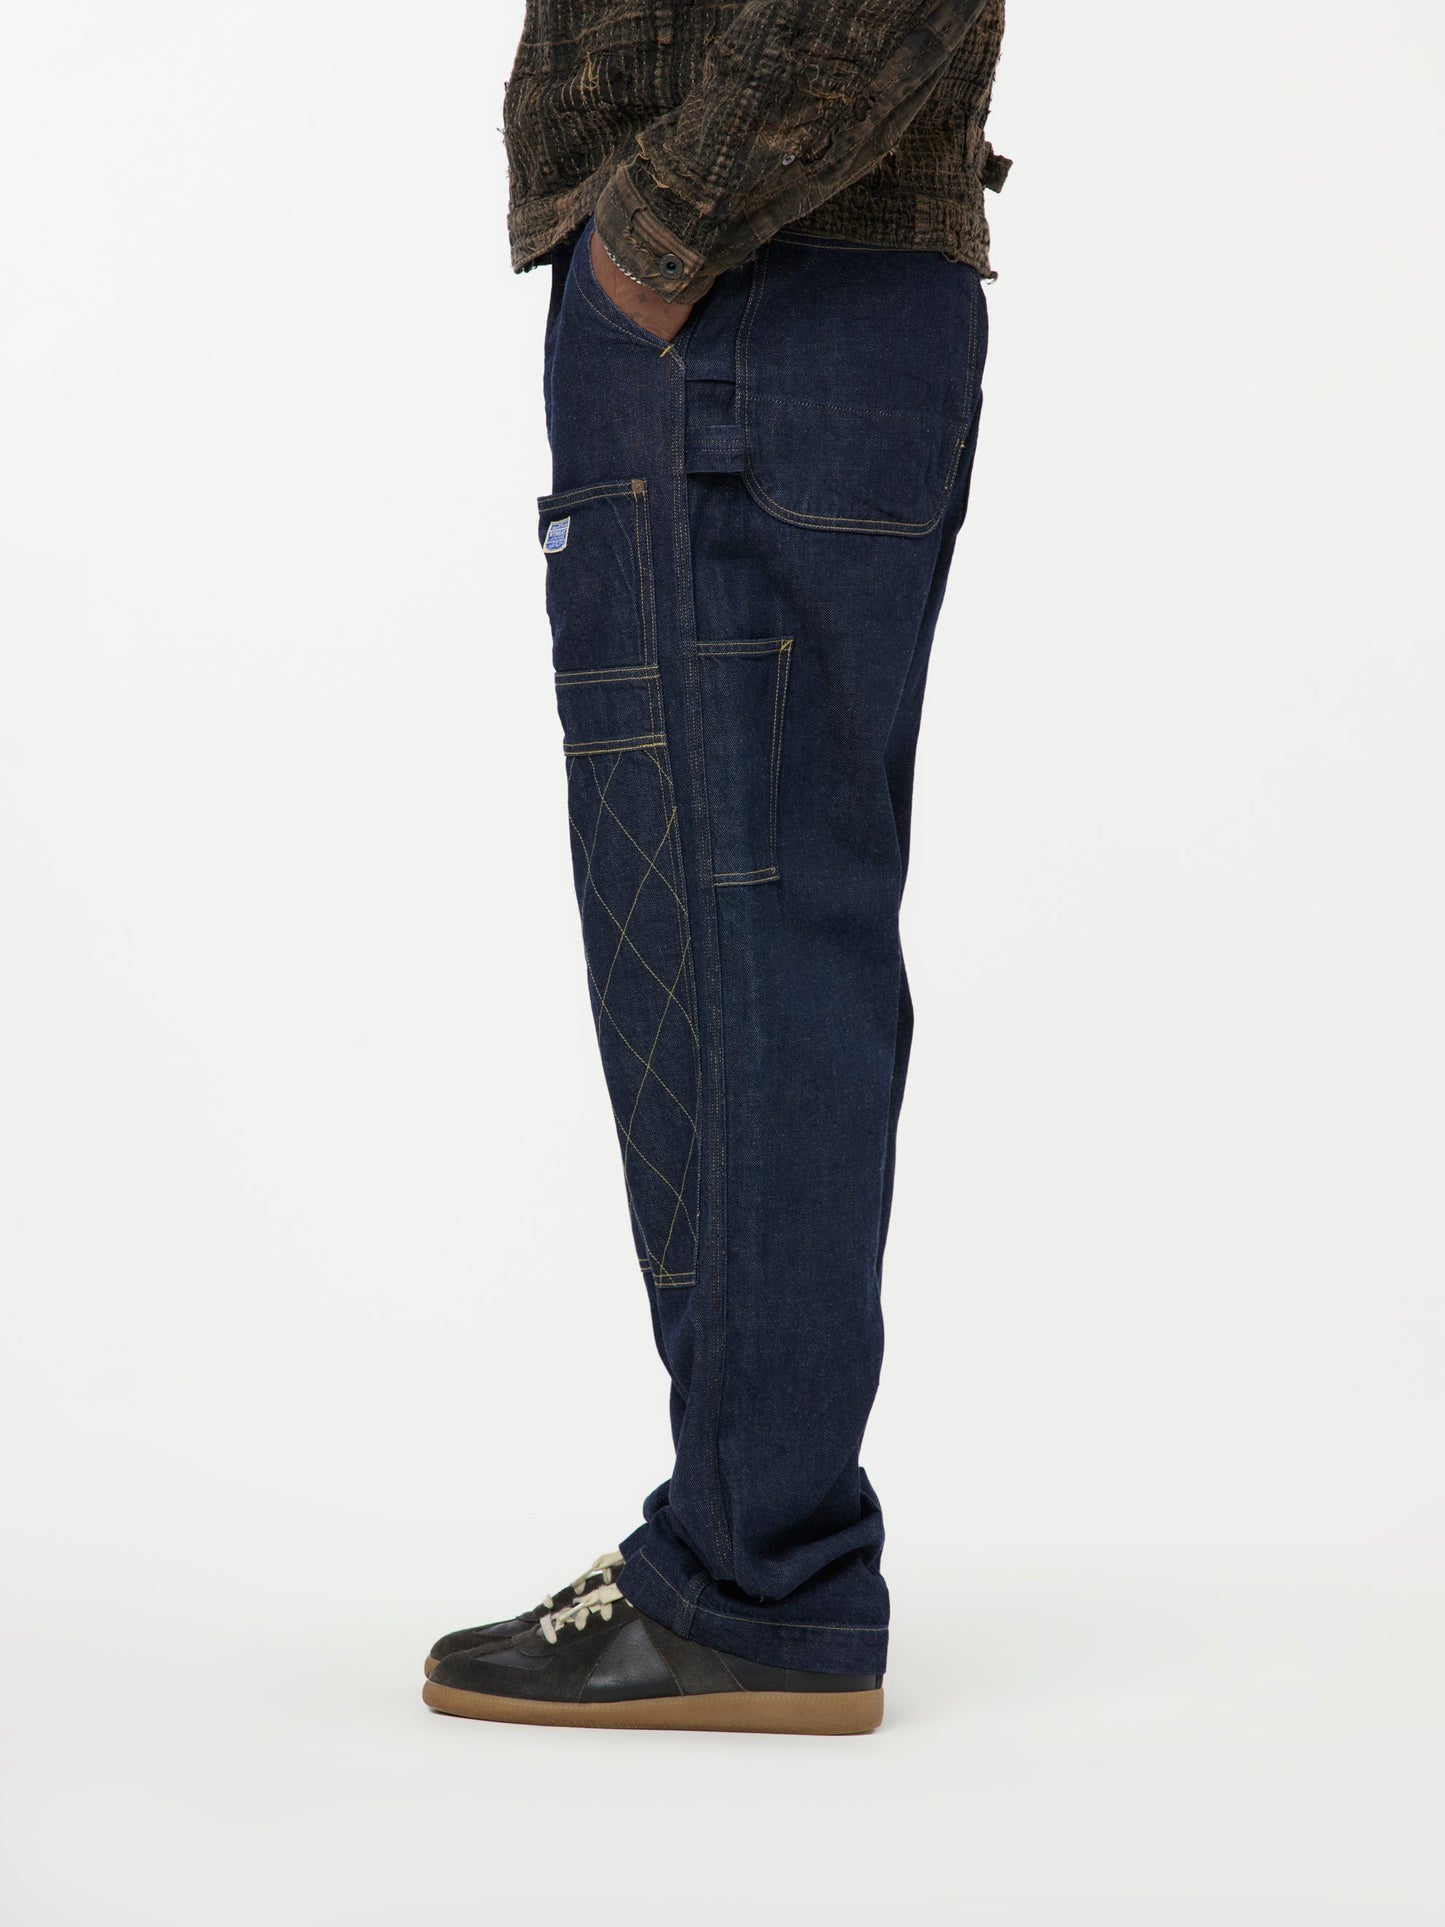 11.5 oz Lumber Denim Jeans (Indigo)